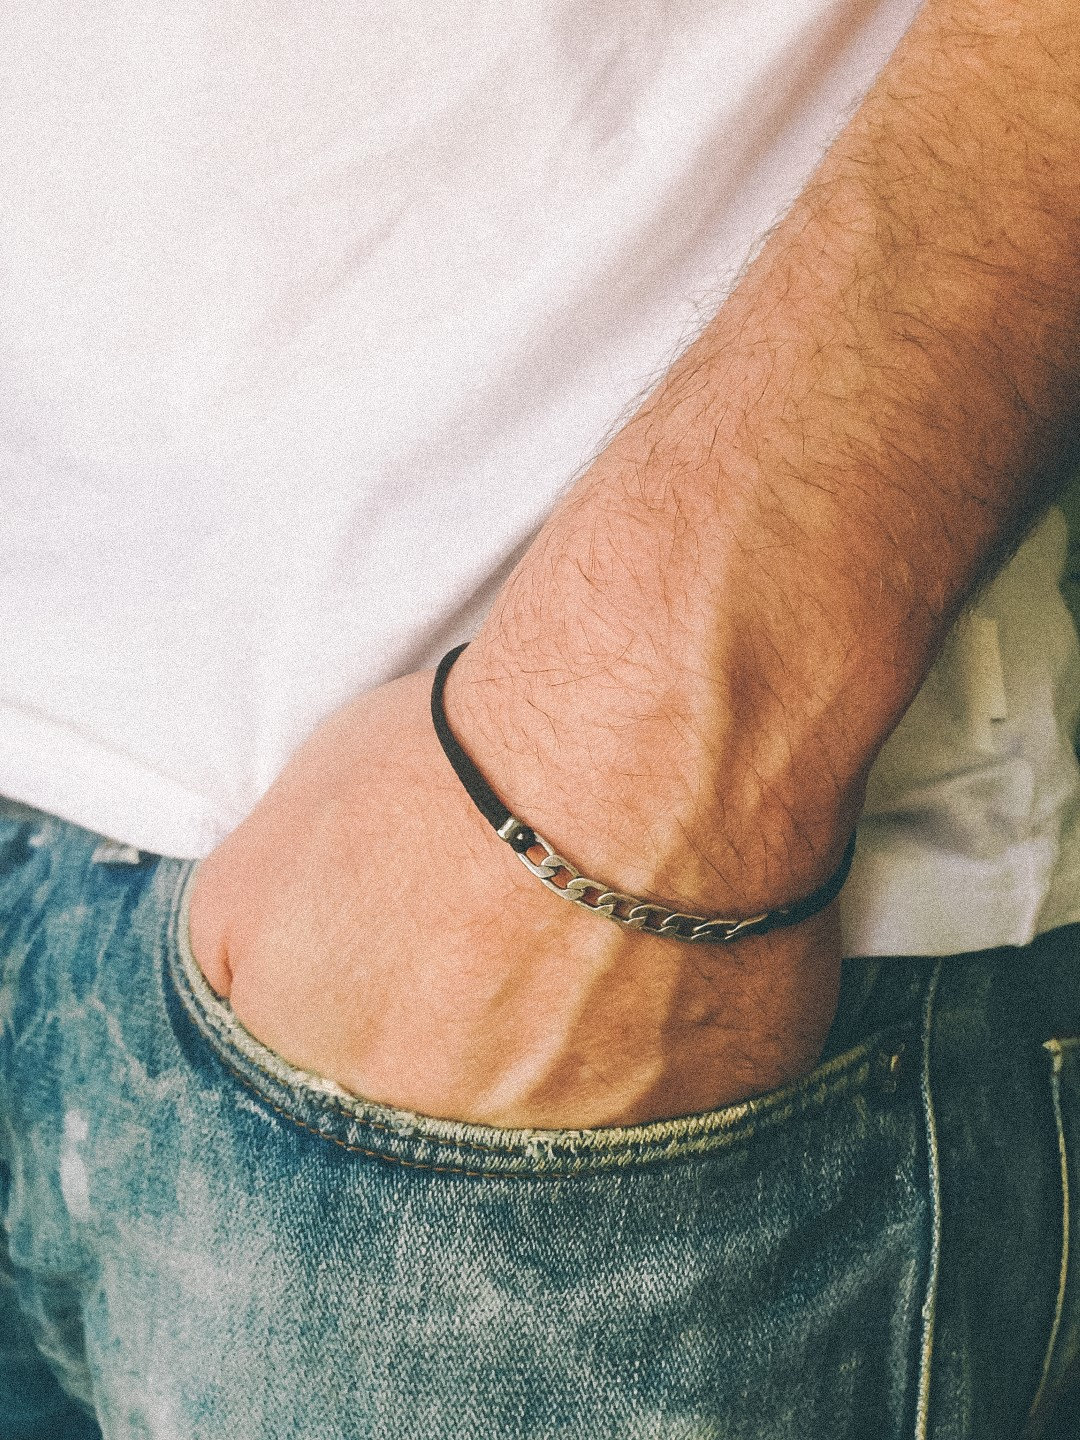 Bracelet For Men, Silver Flat Link Chain With A Black Cord, Mens Bracelet, Gift For Him, Black Yoga Bracelet. Men's Jewelry, Groomsman